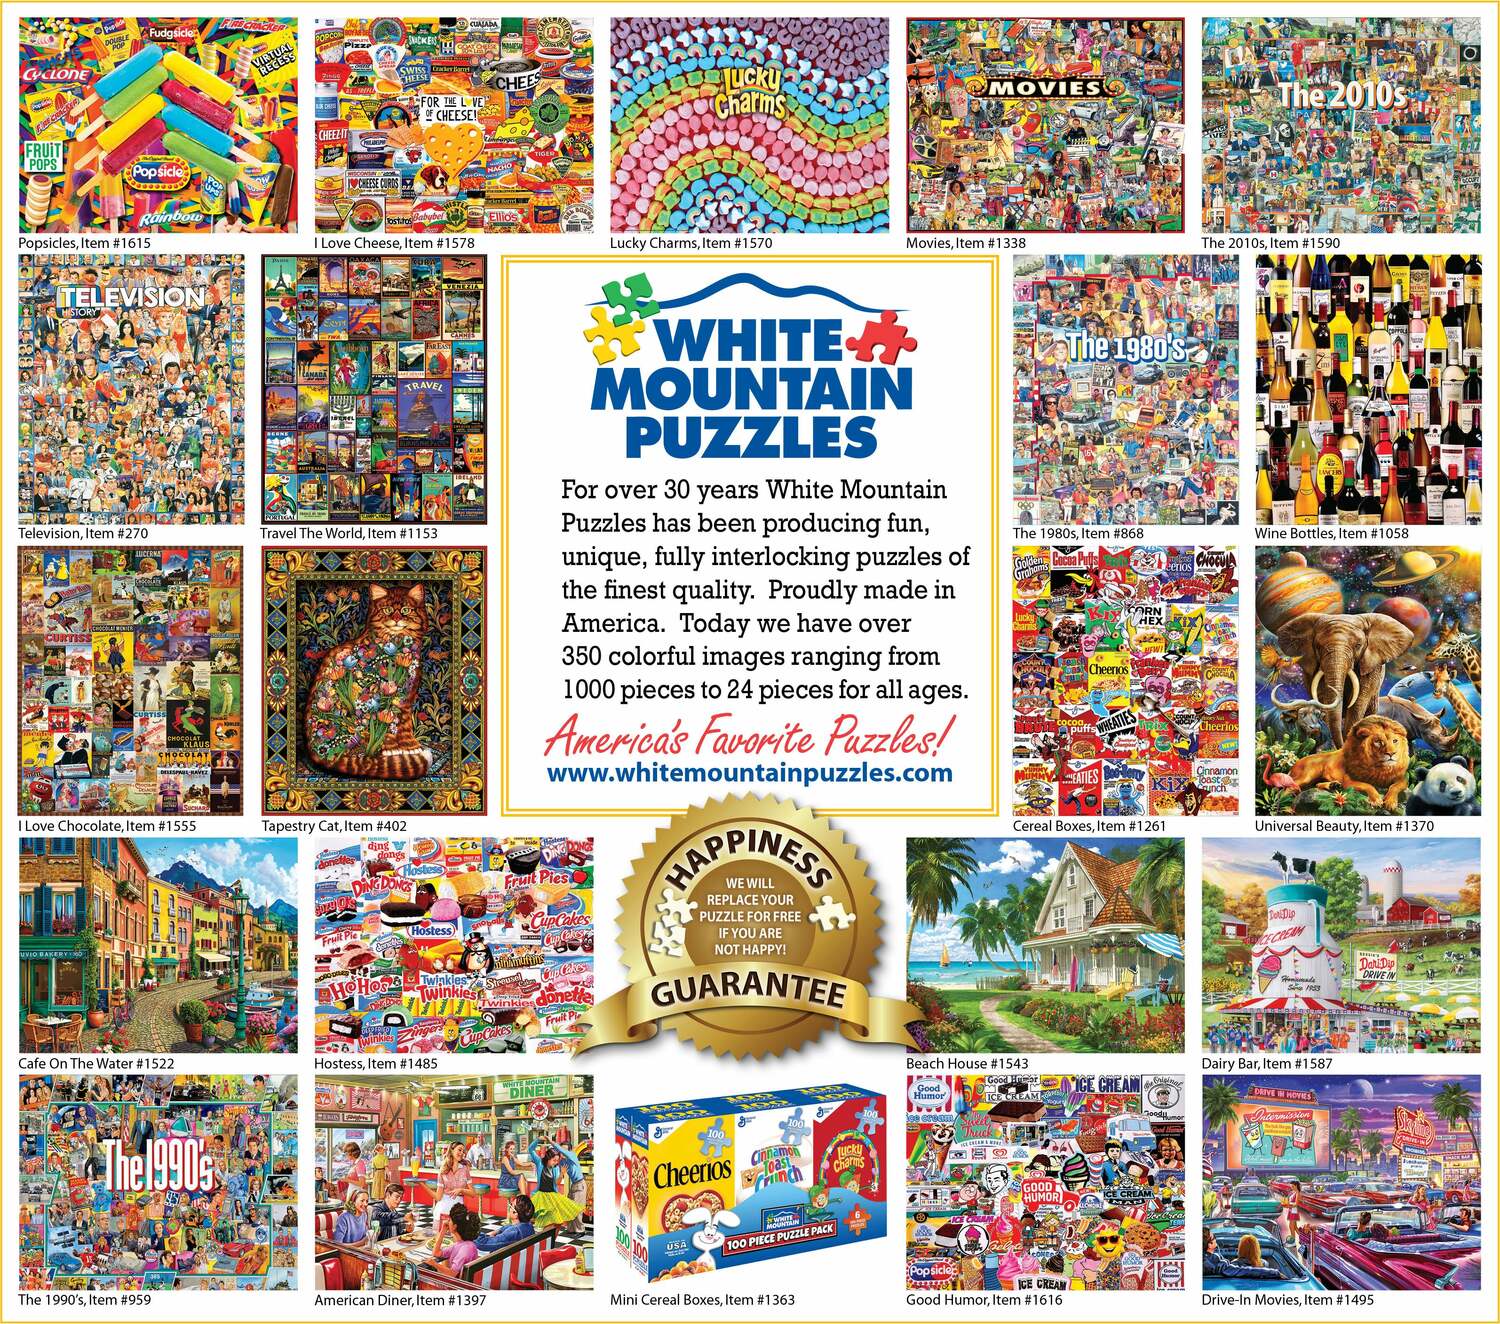 Farmer's Market - 500 Piece Jigsaw Puzzle